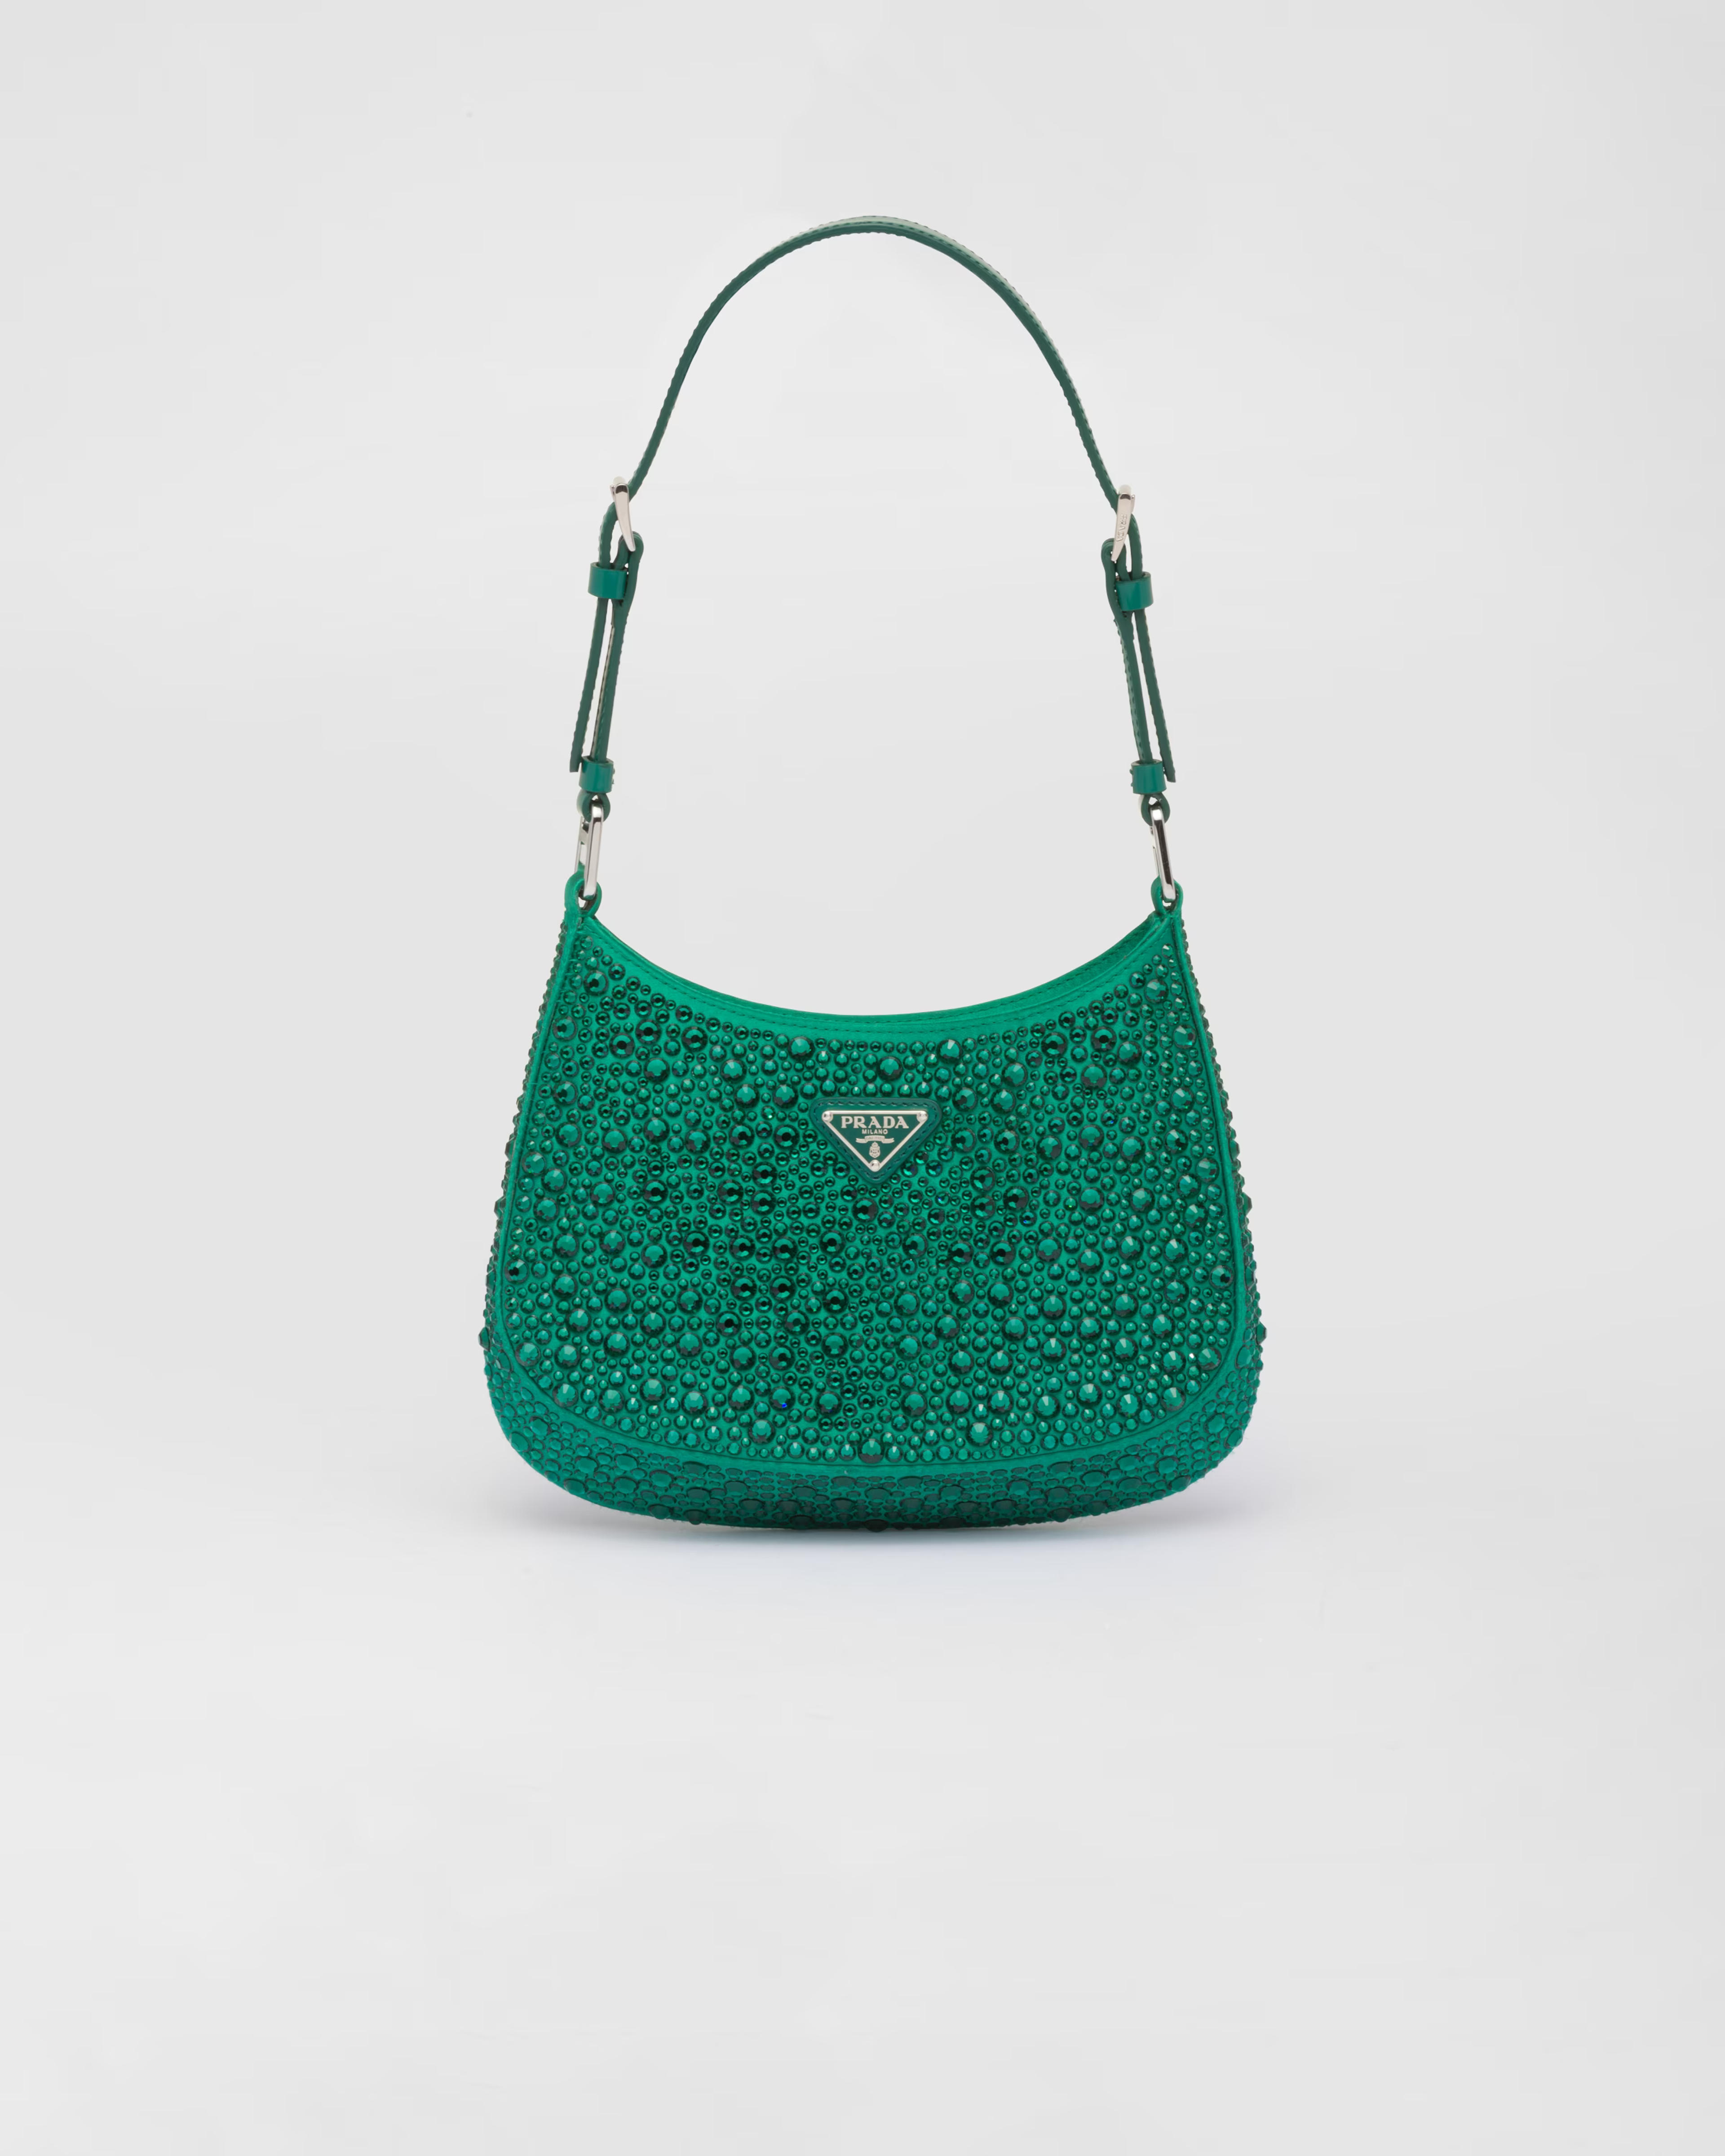 Prada - Women's Cleo Bag with Crystals Shoulder Bag - Green - Satin